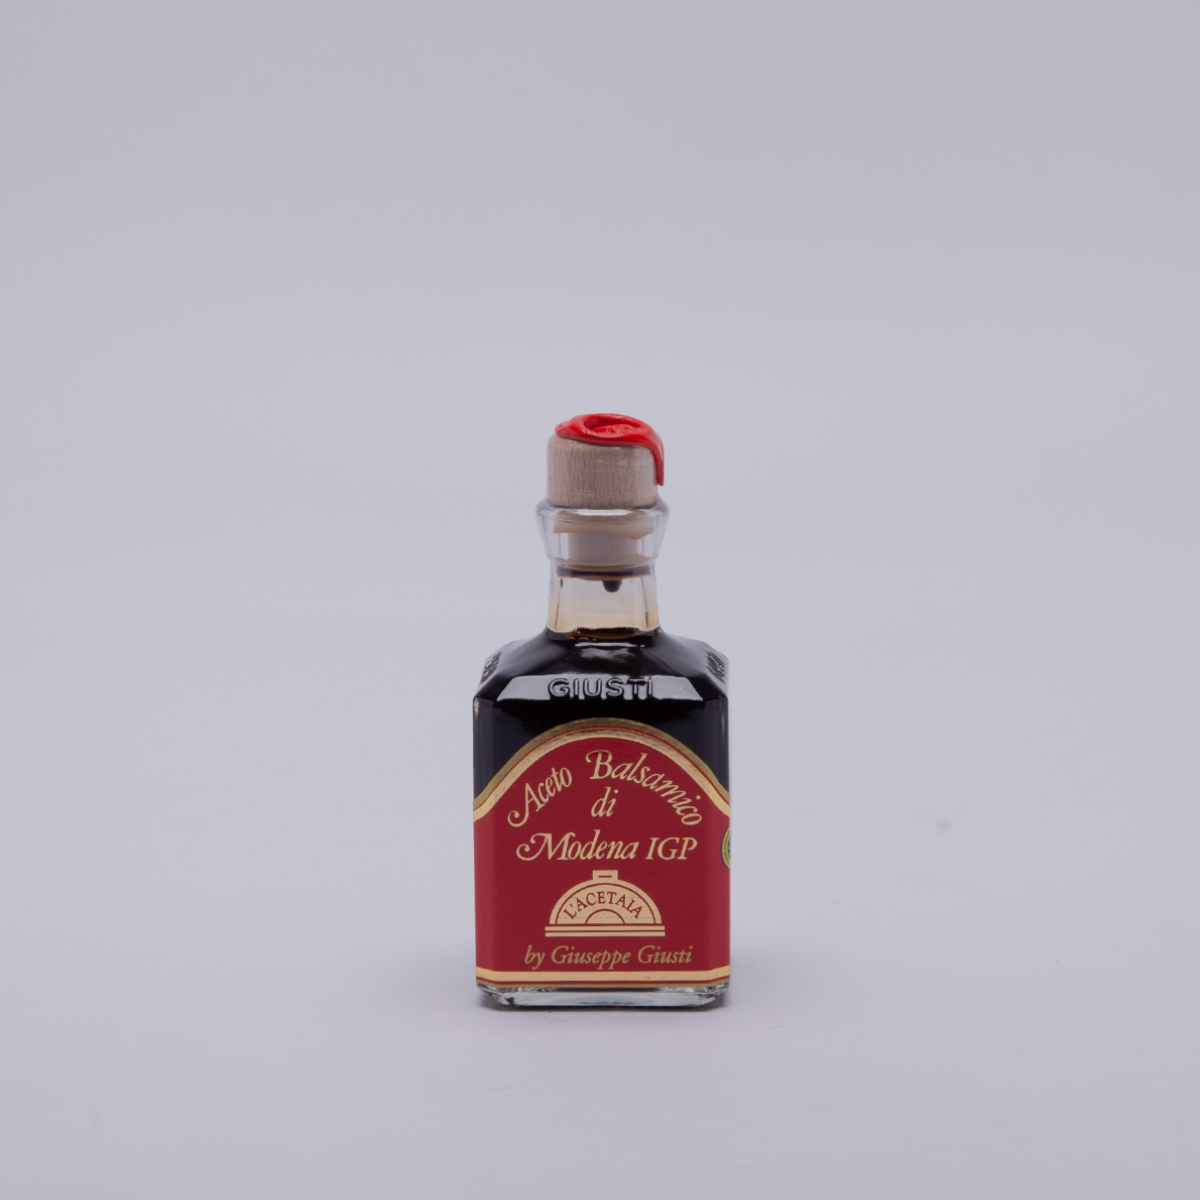 Giusti | Red Label Balsamic Vinegar | 250ml